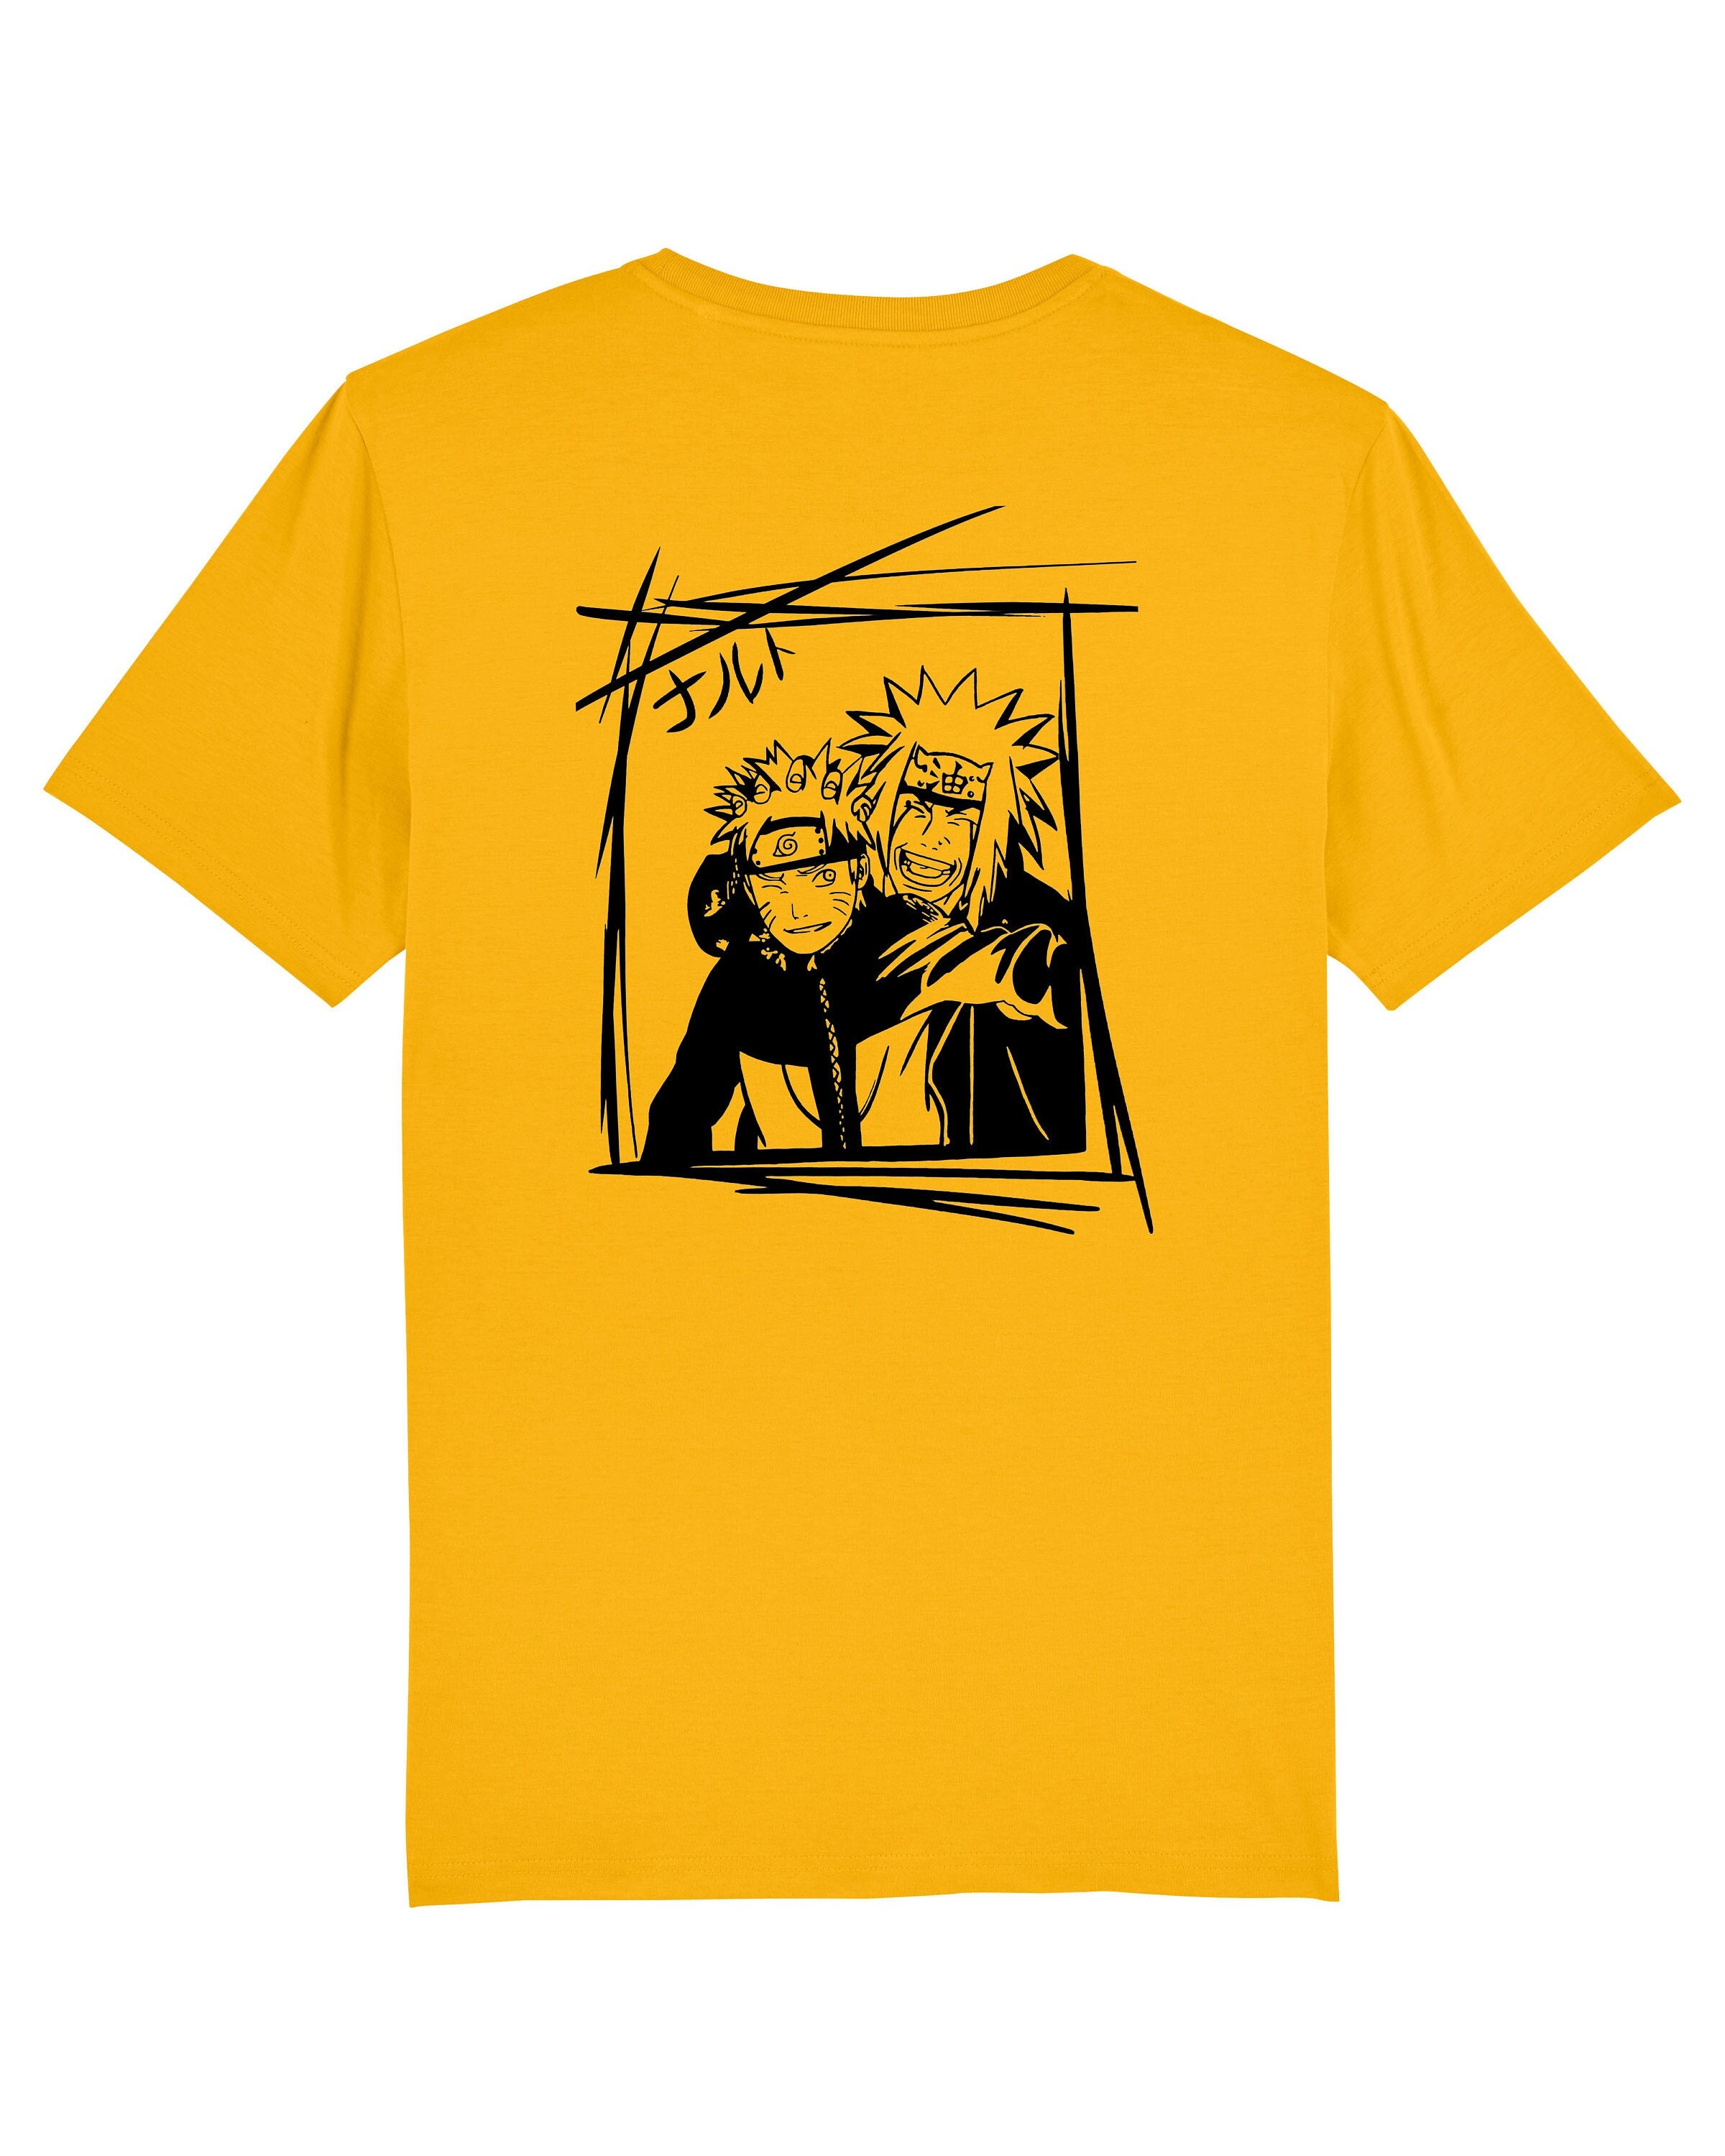 Naruto  Image manga, Personnaliser tee shirt